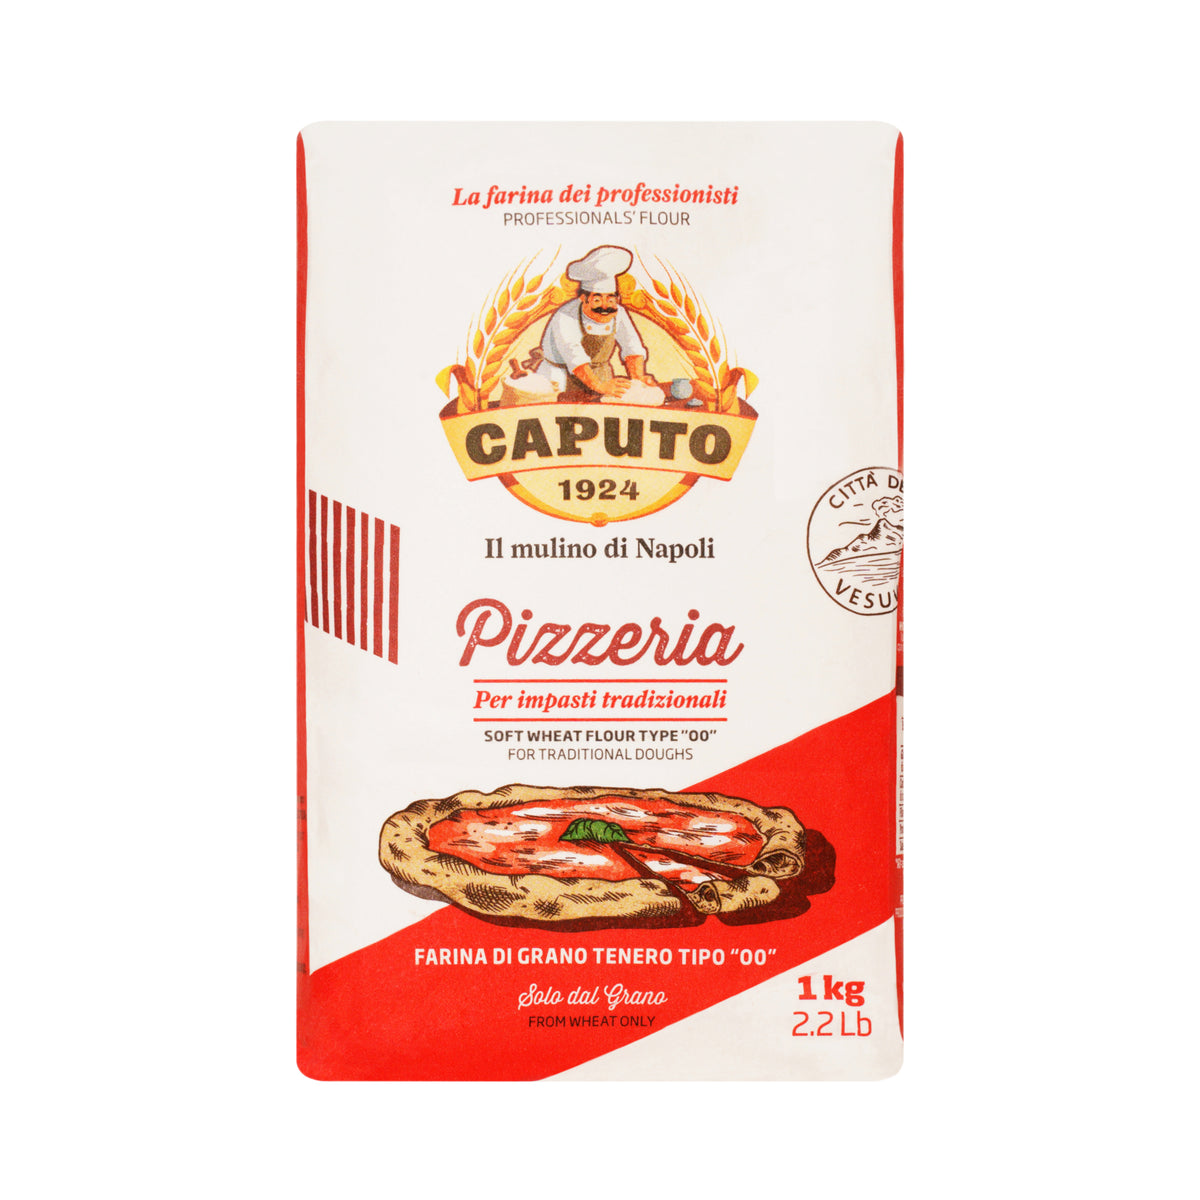 Caputo Pizzeria flour available in Boston - Resources - Pizza Making Forum